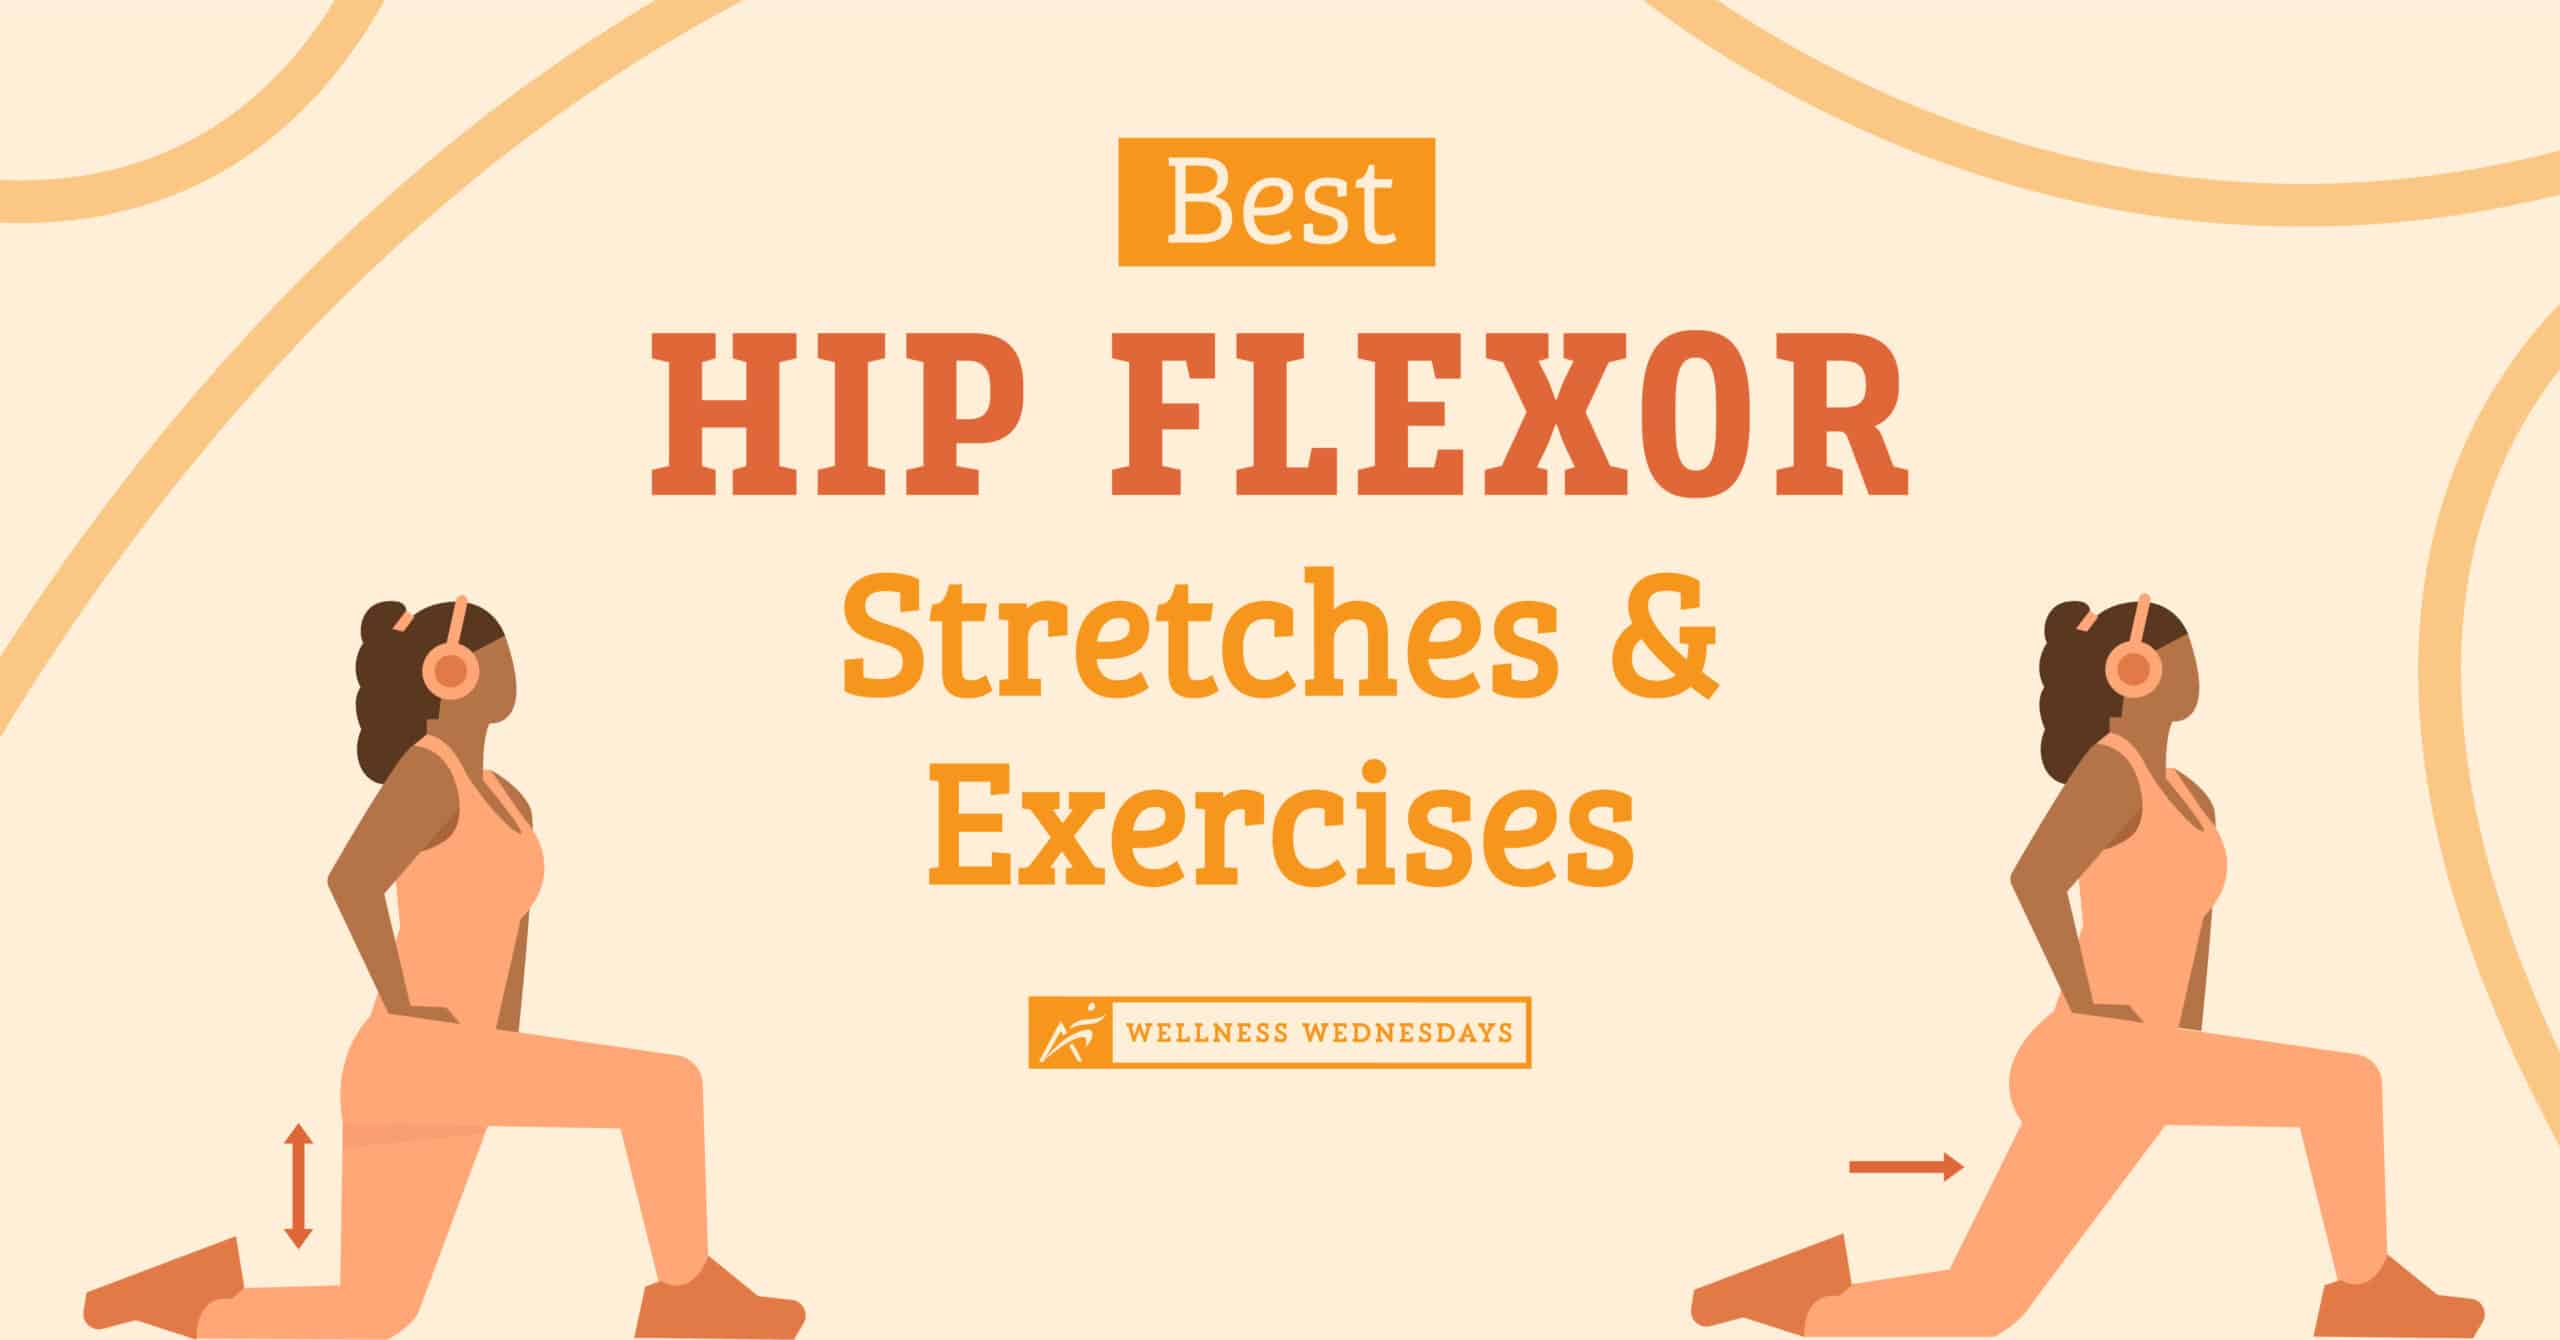 Best Hip Flexor Stretches & Exercises